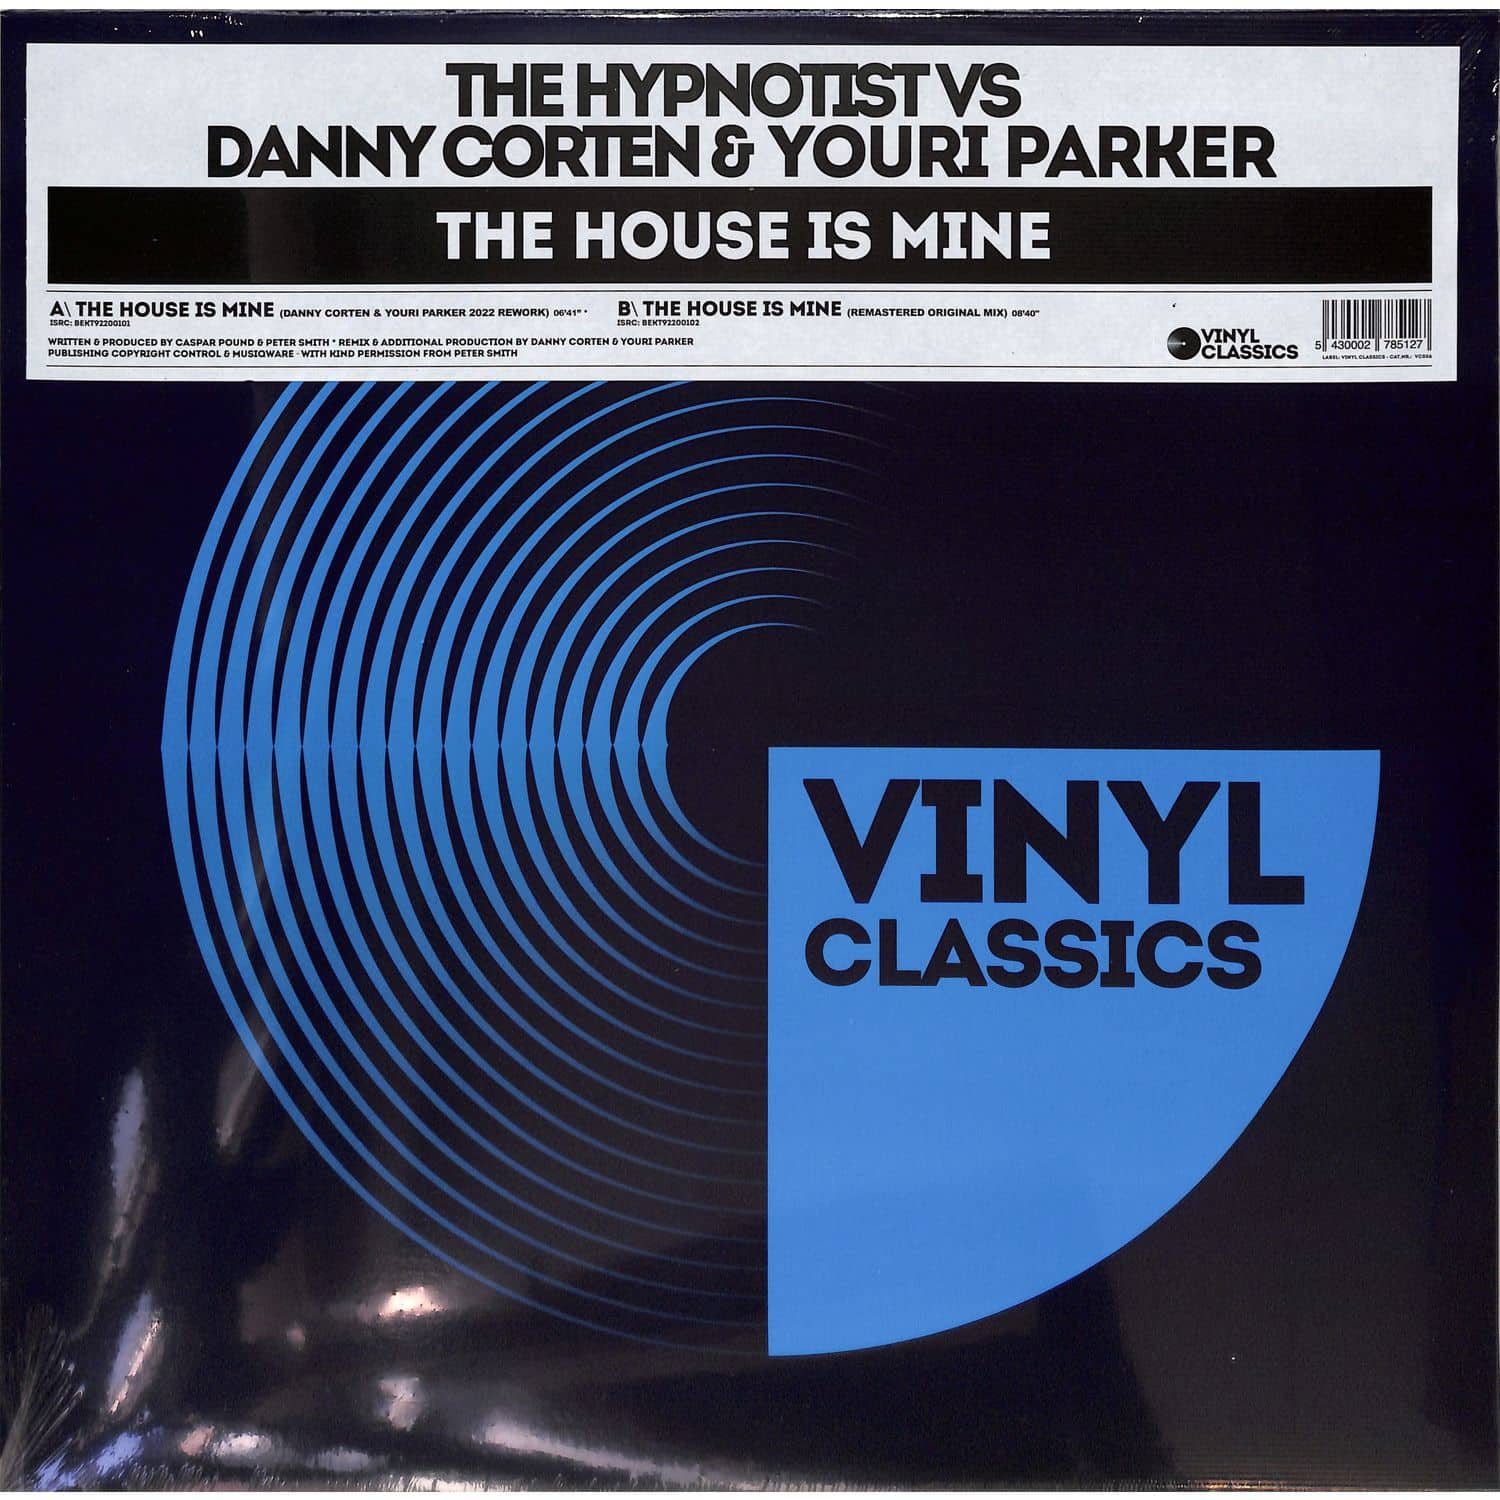 Danny Corten & Youri Parker vs The Hypnotist - THE HOUSE IS MINE